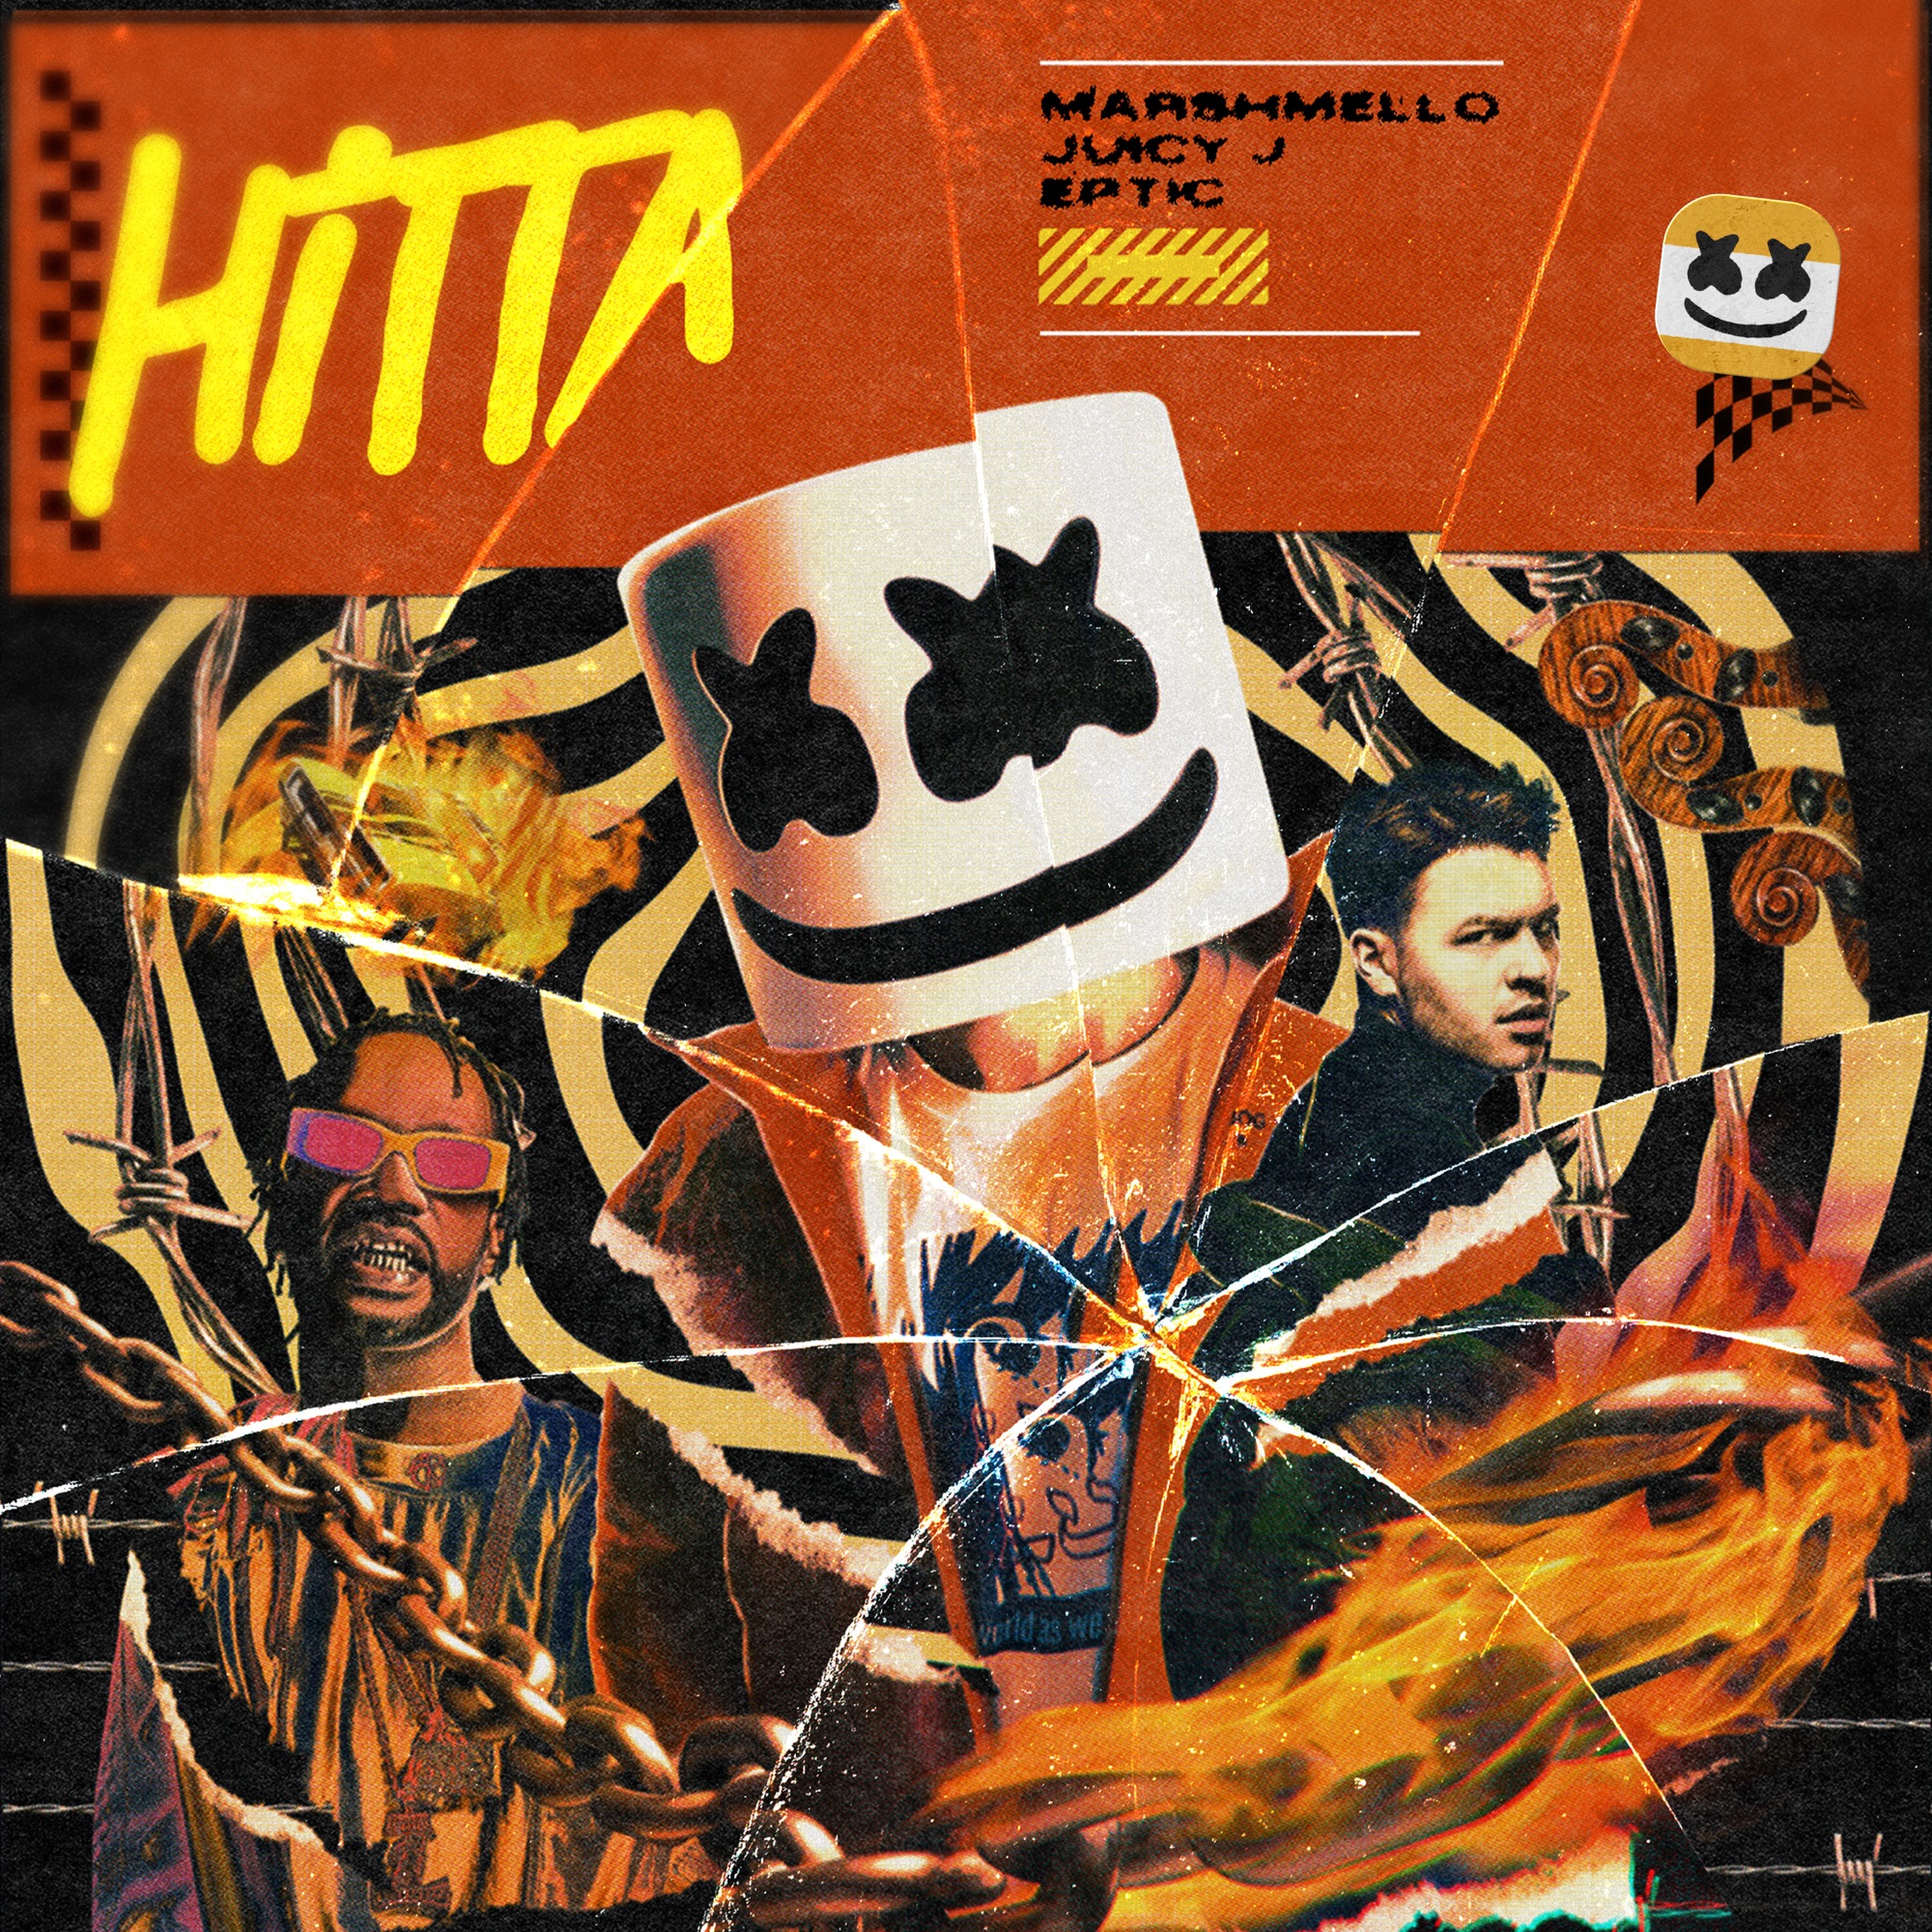 Marshmello, Eptic & Juicy J - Hitta - Single